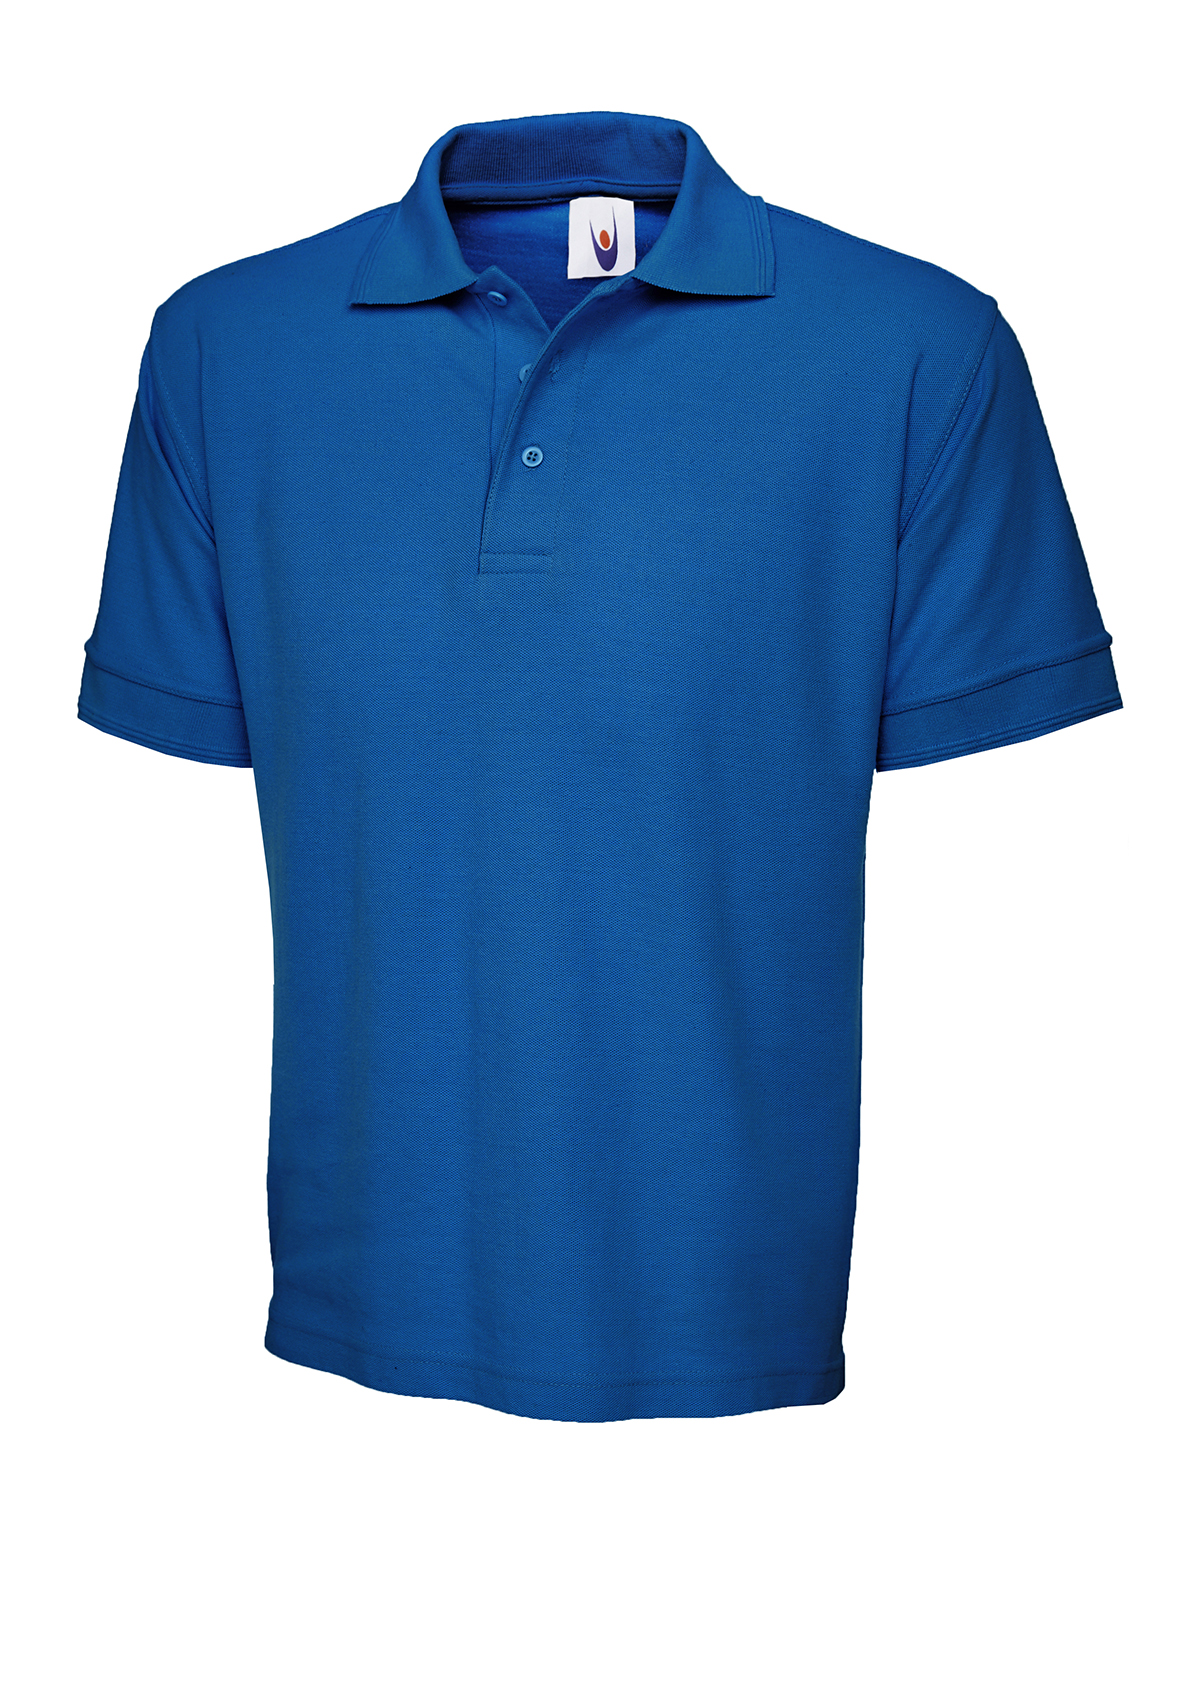 Uneek Herren Premium Poloshirt königsblau